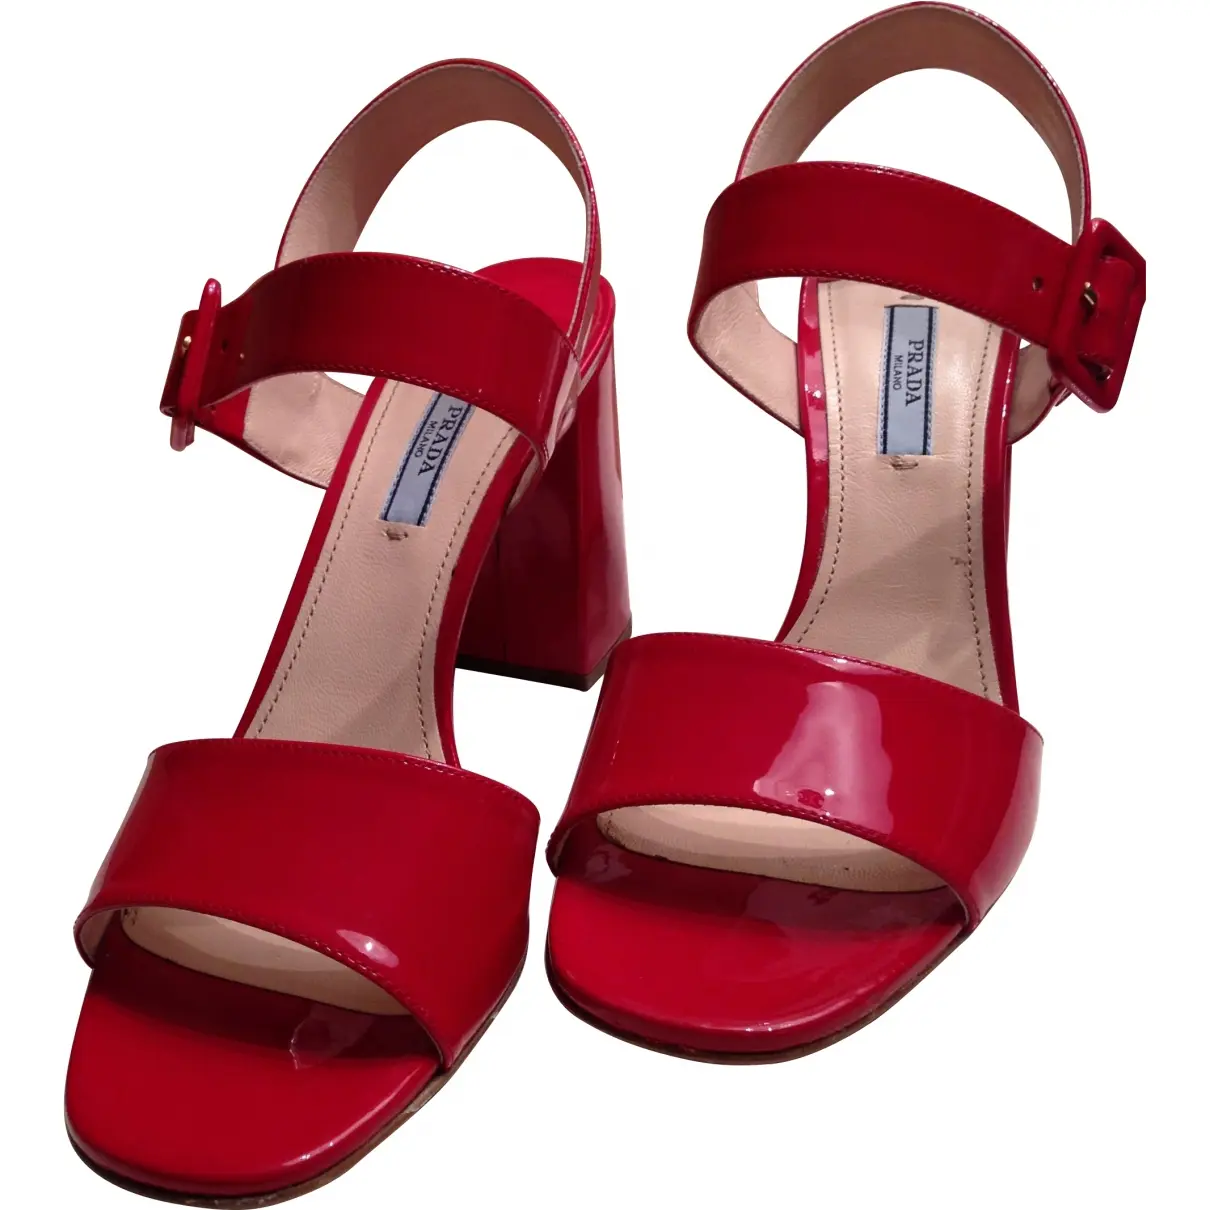 Red Patent leather Heels Prada